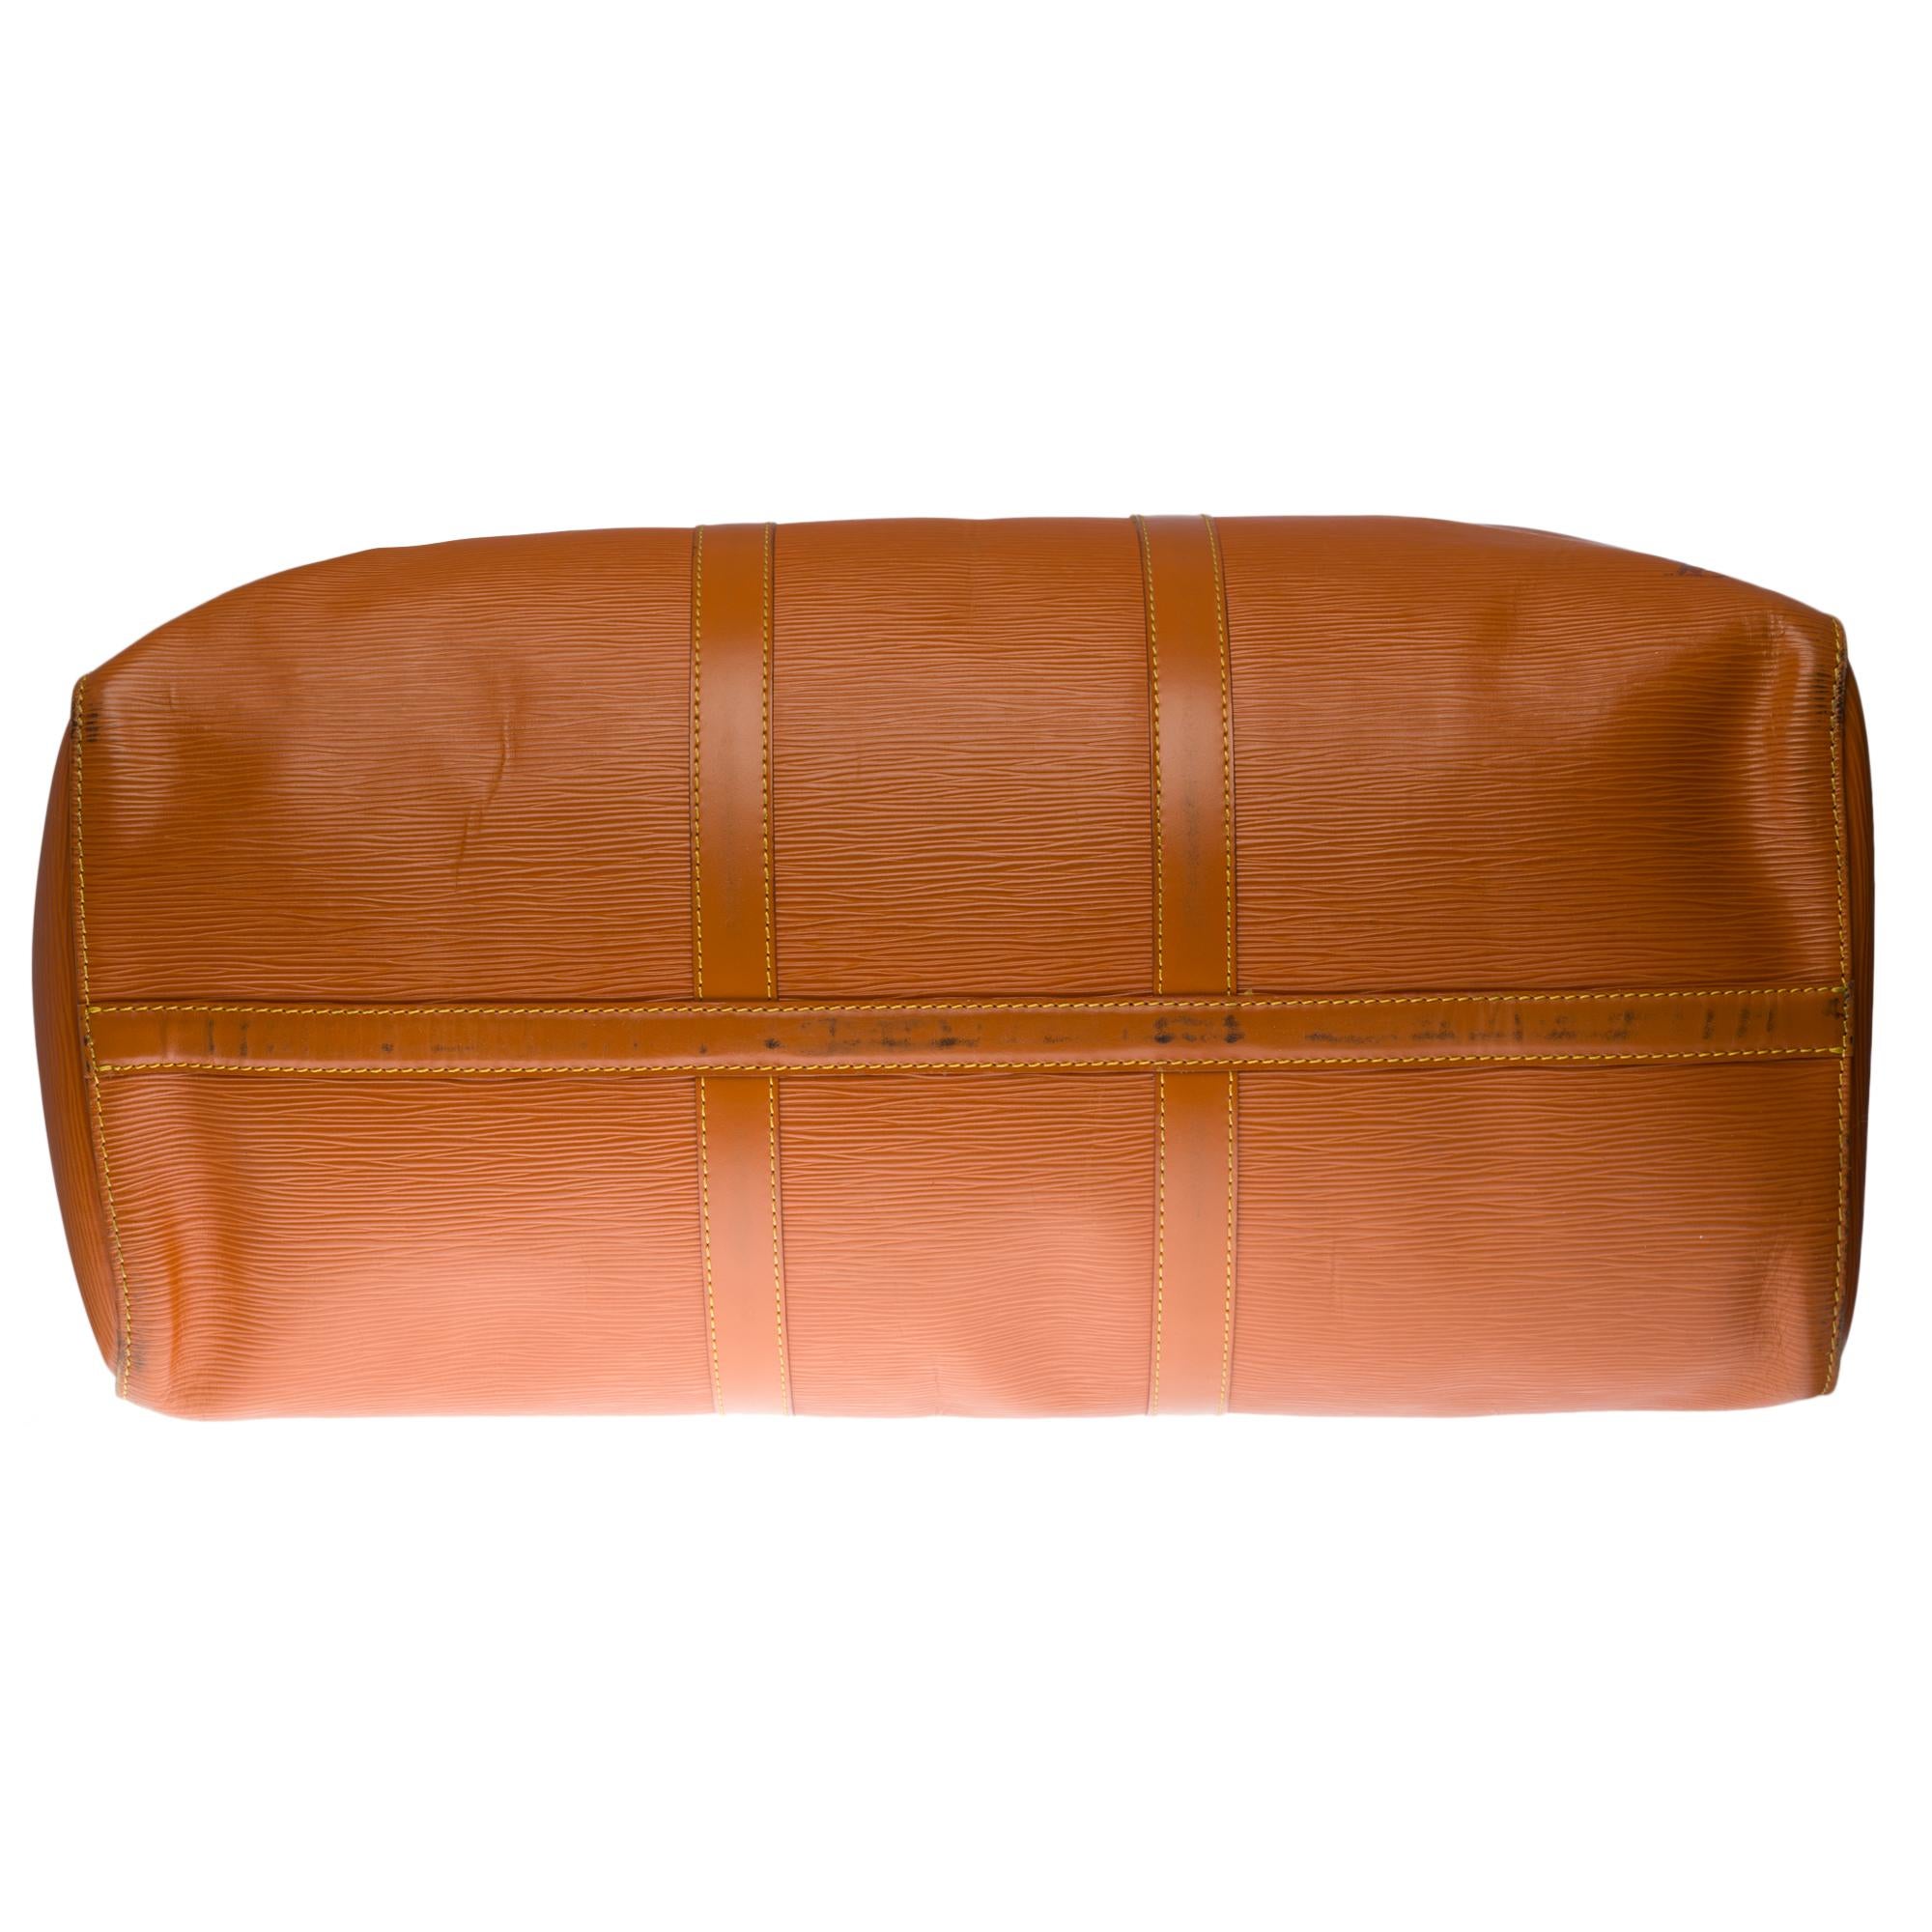 Louis Vuitton Keepall 50 Travel bag in Cognac épi leather 1